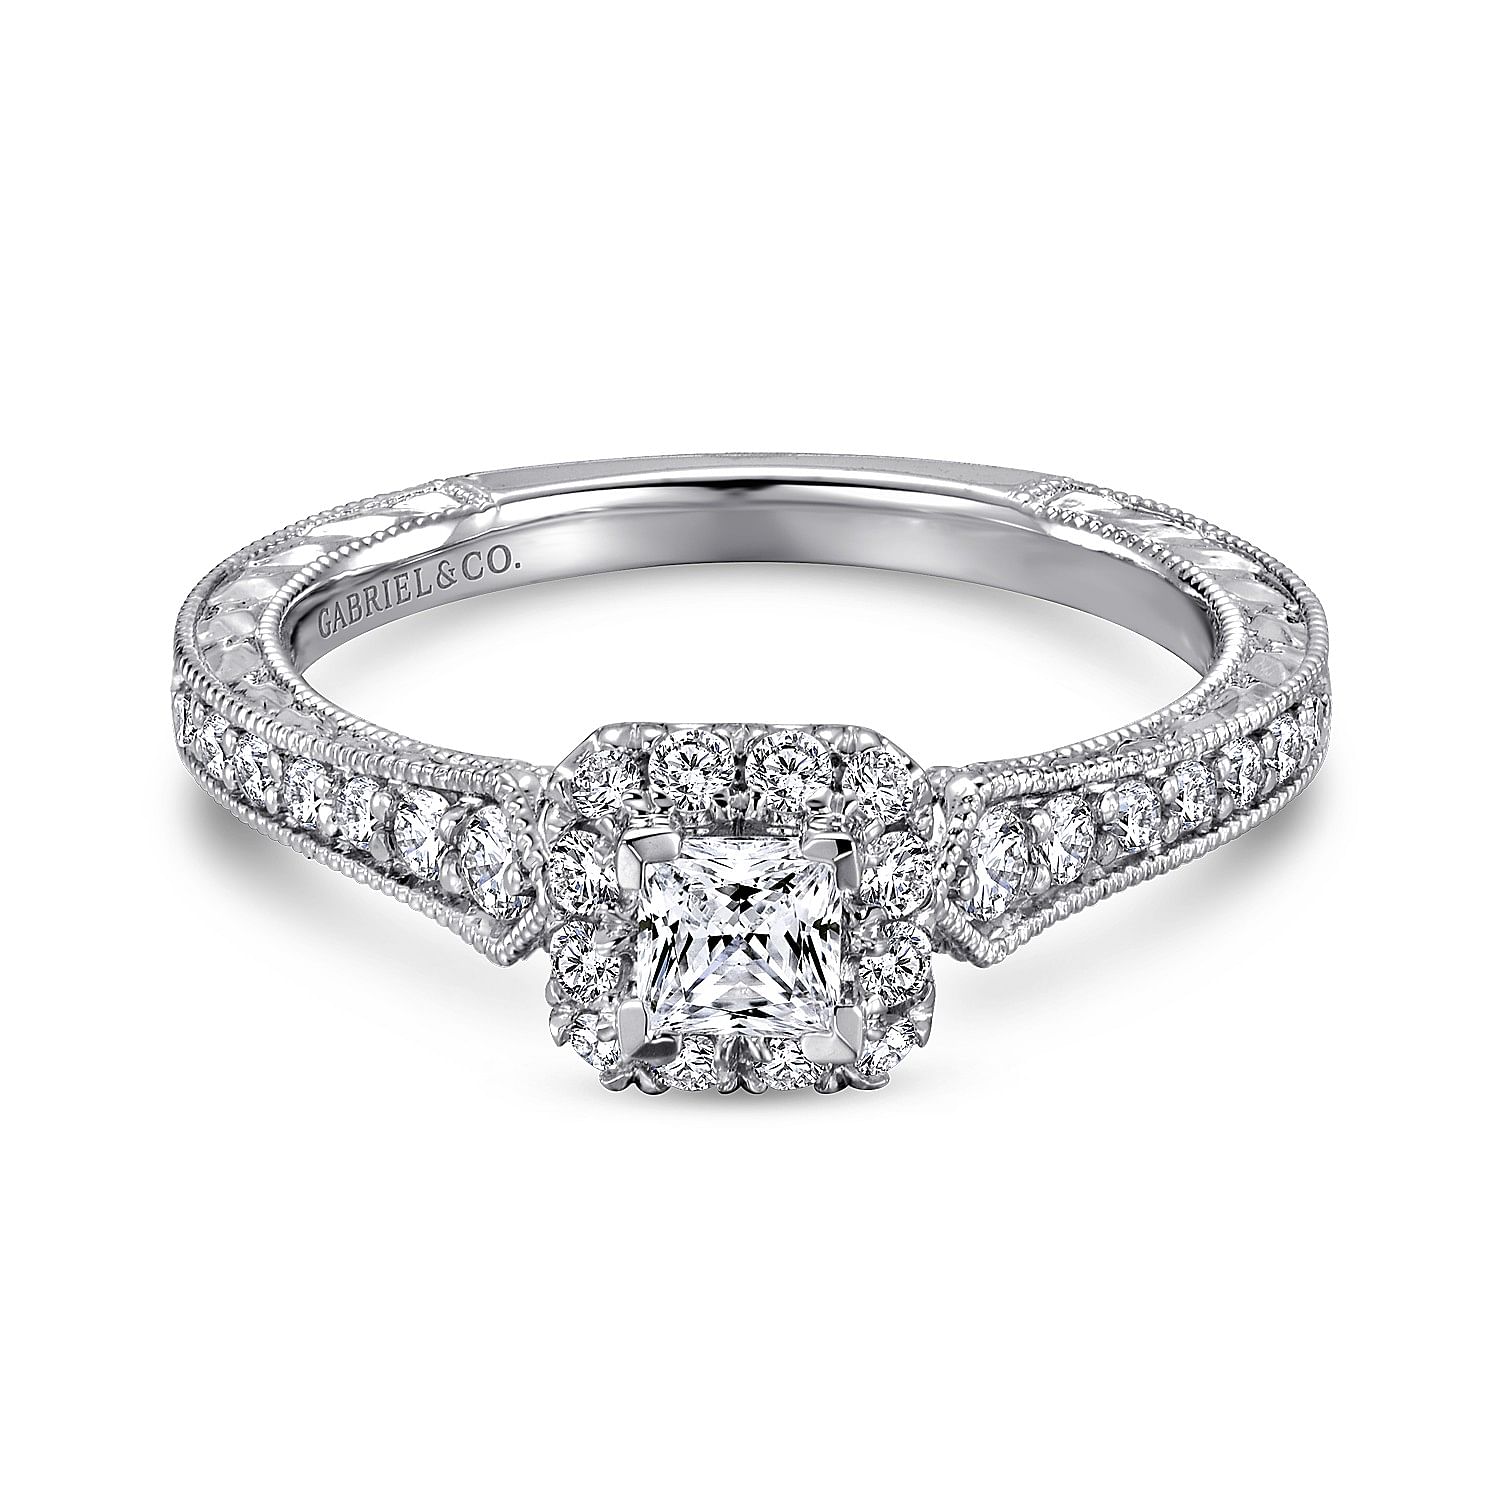 Delancey - Vintage Inspired 14K White Gold Princess Halo Complete Diamond Engagement Ring